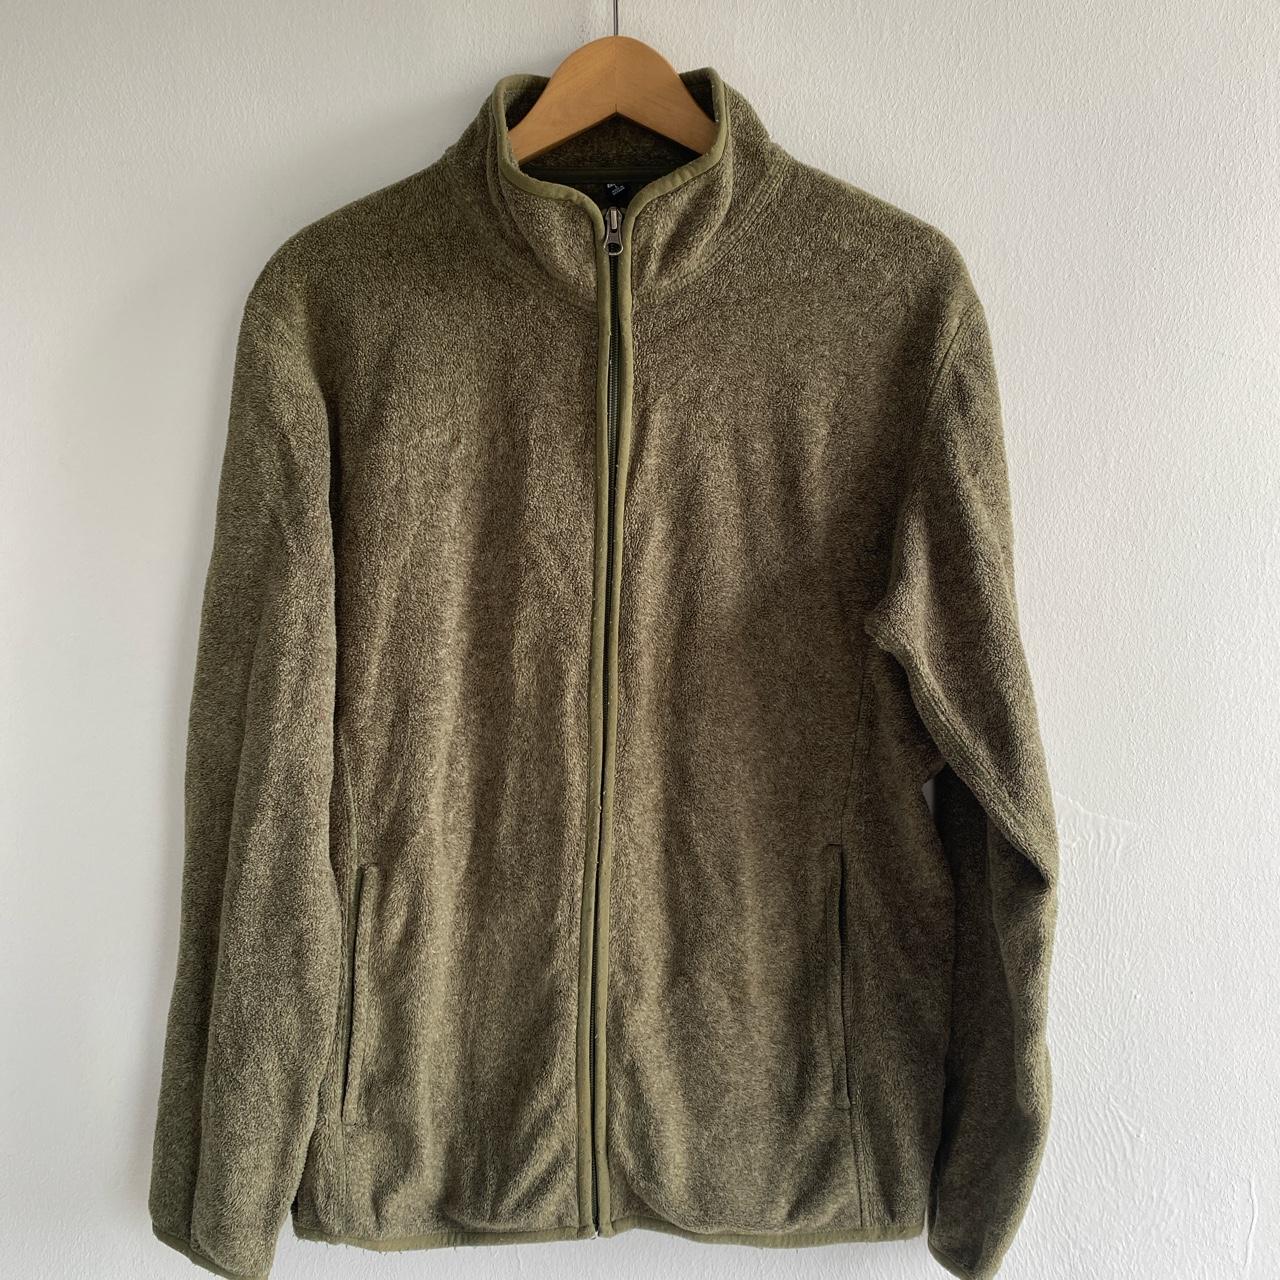 Vintage Uniqlo Fleece Jacket Pit 23” Length... - Depop